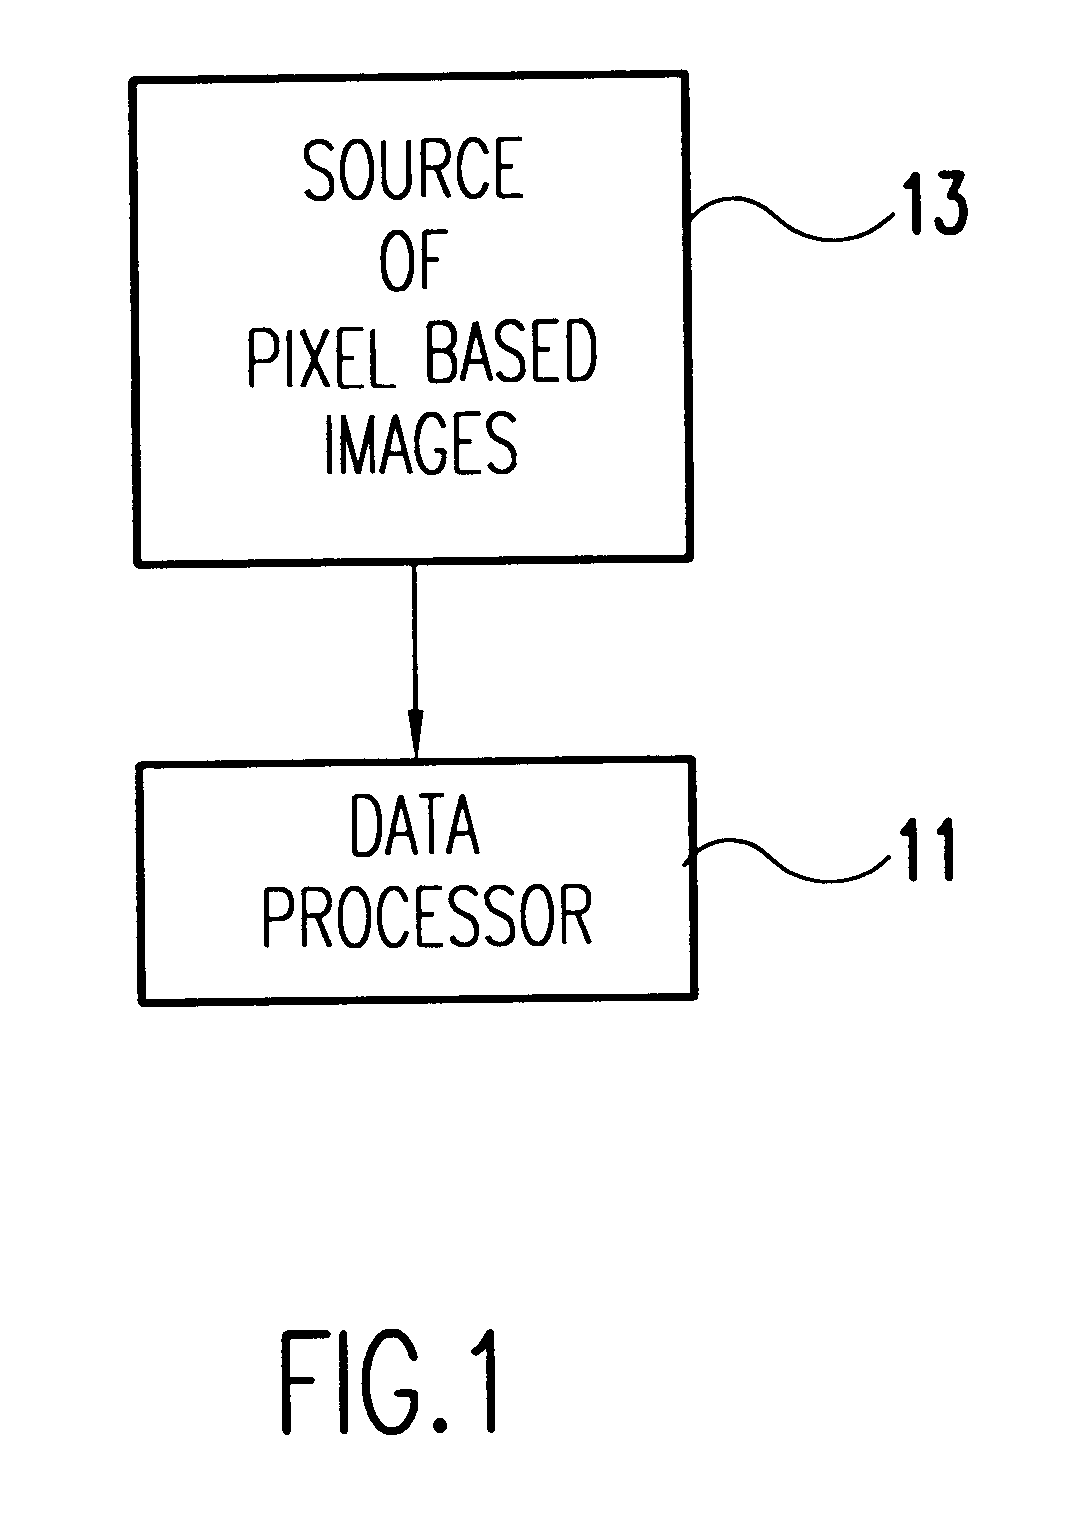 Image segmentation system